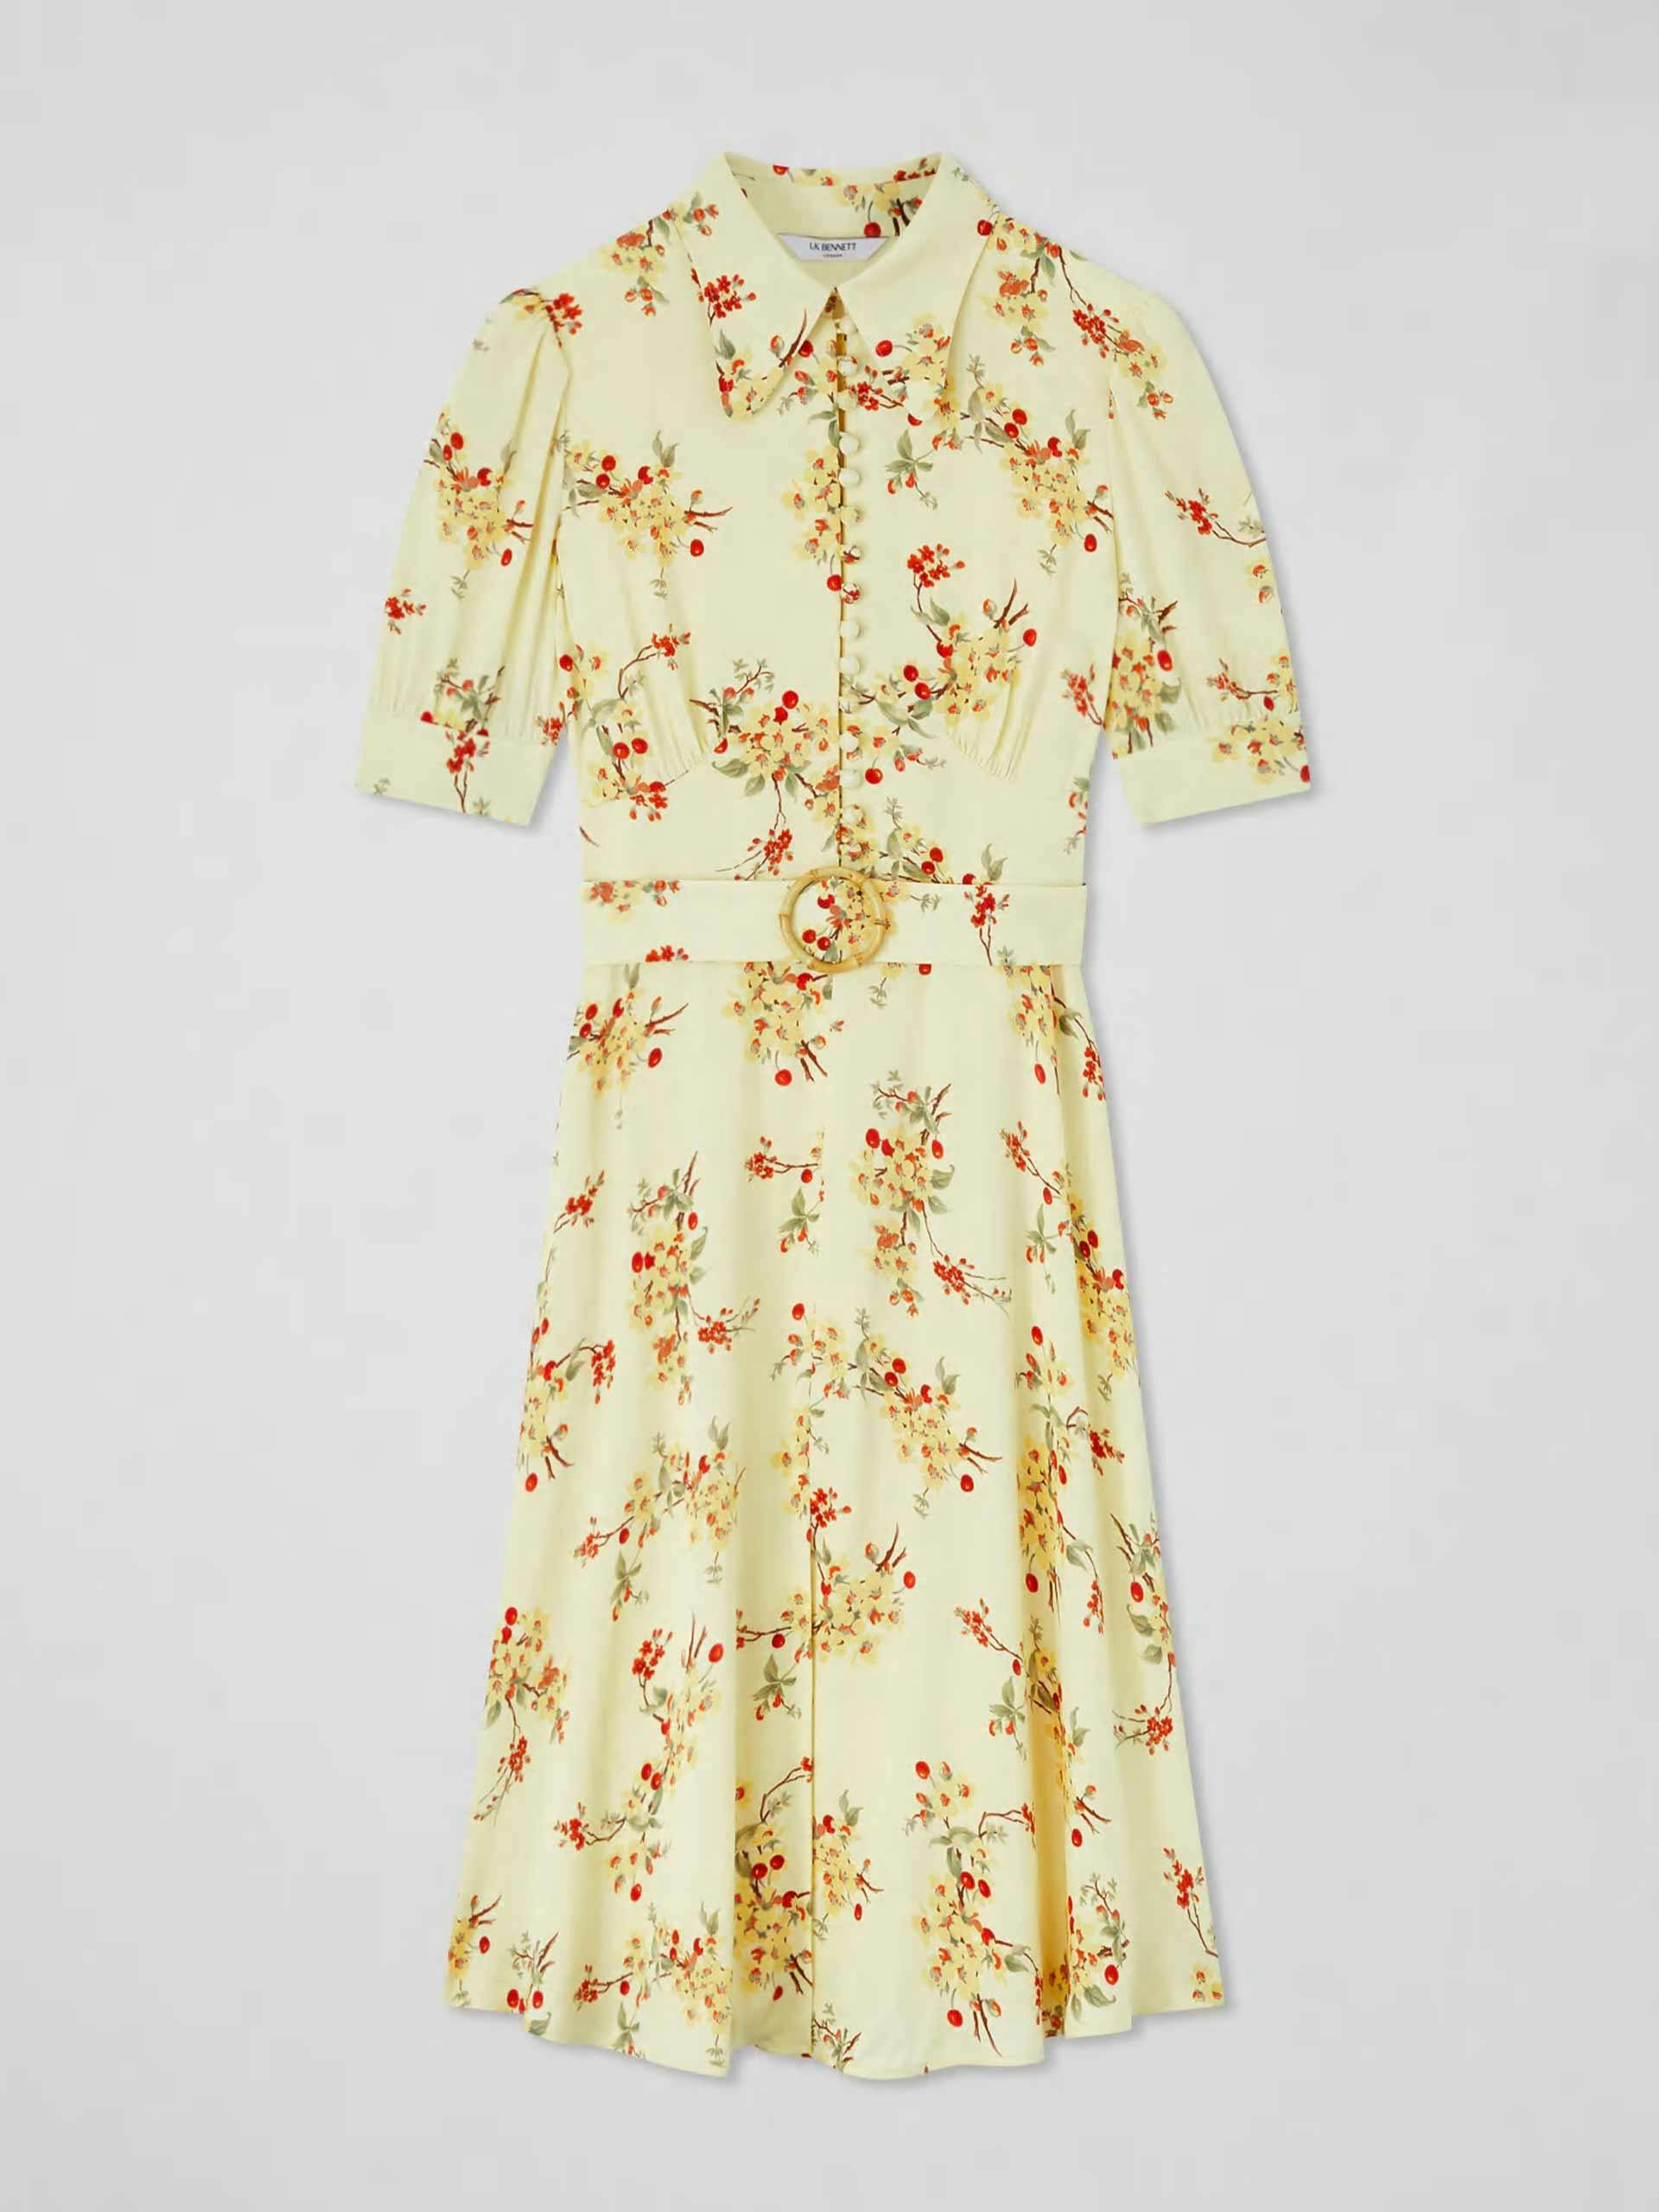 Cherry blossom print dress